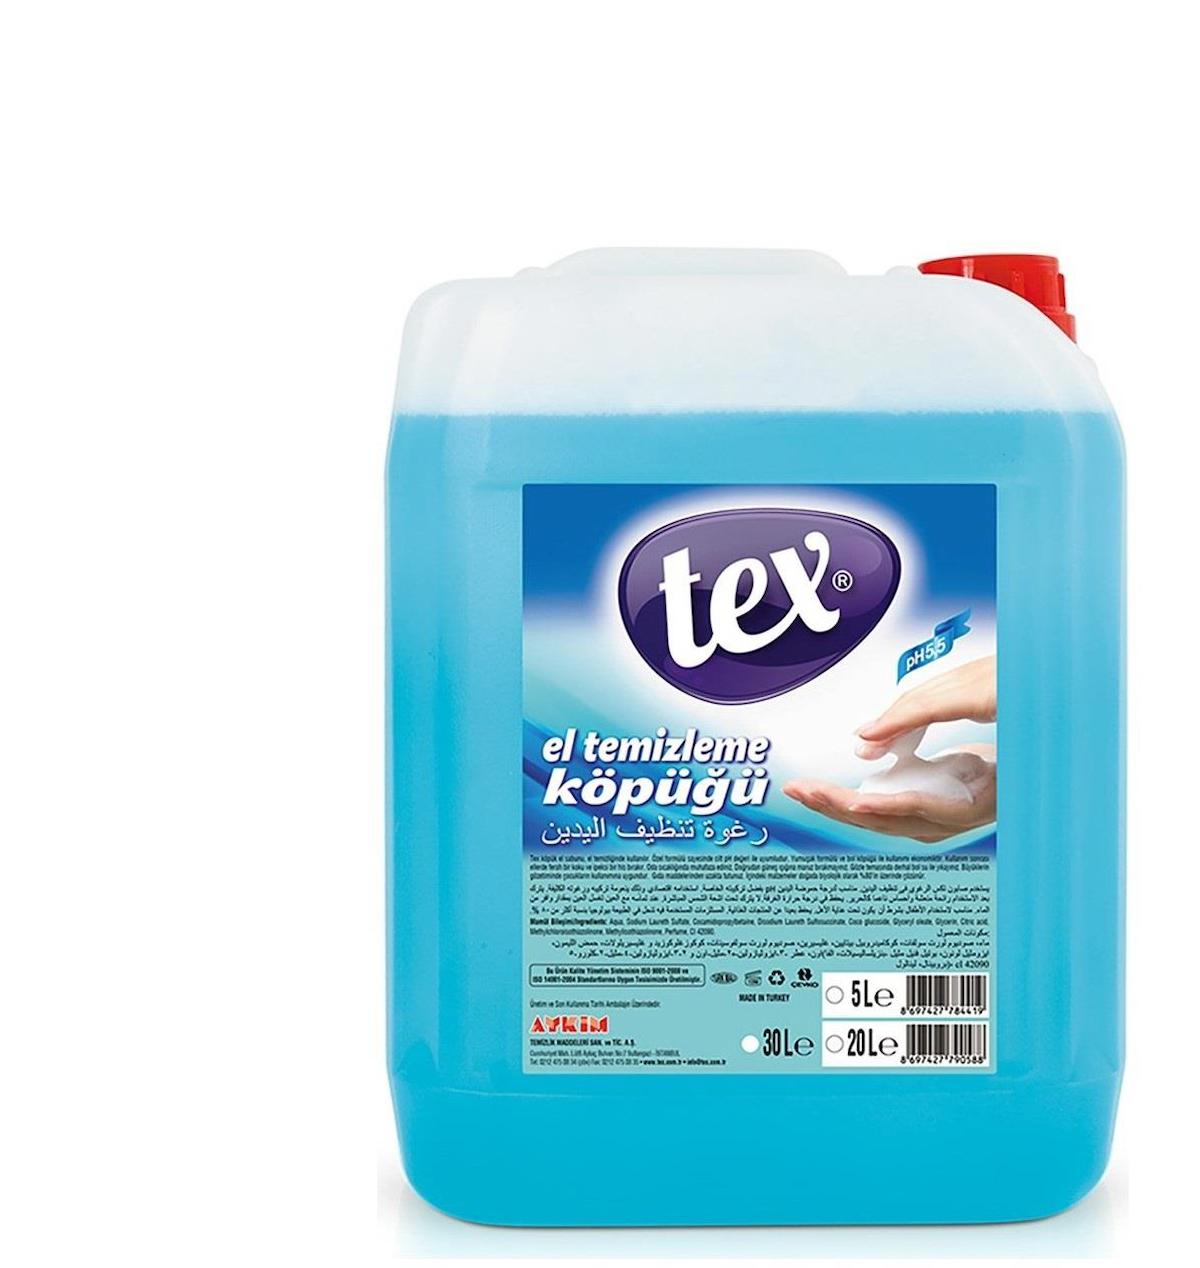 Tex Nemlendiricili Köpük Sıvı Sabun 5 kg Tekli